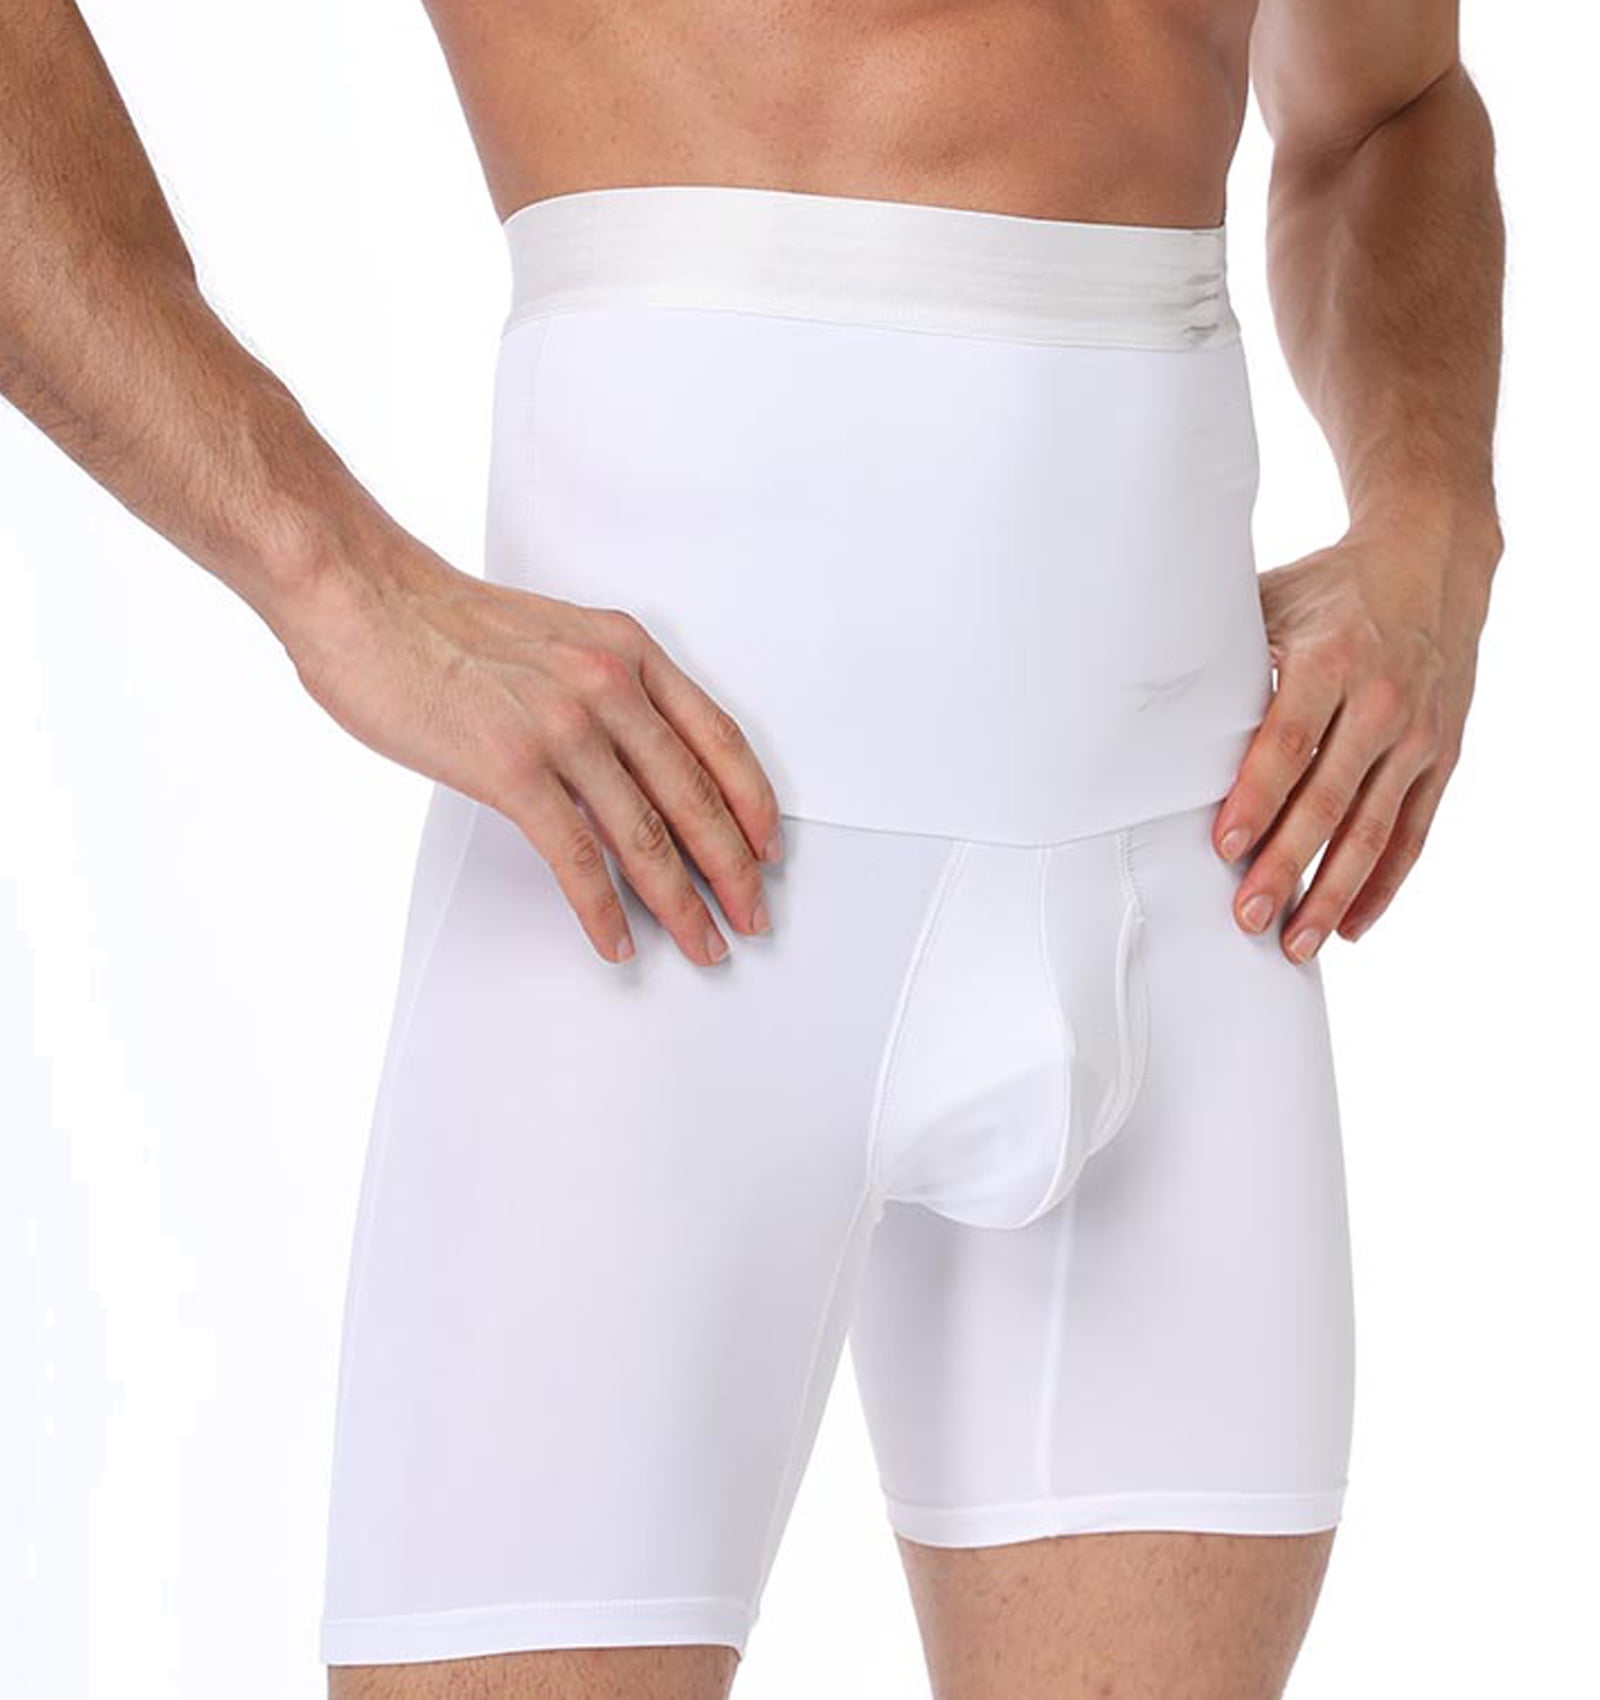 SHAPERIN Men's Tummy Control Shapewear Shorts High Waist Slimming  Anti-Curling Underwear Body Shaper Seamless Boxer Brief